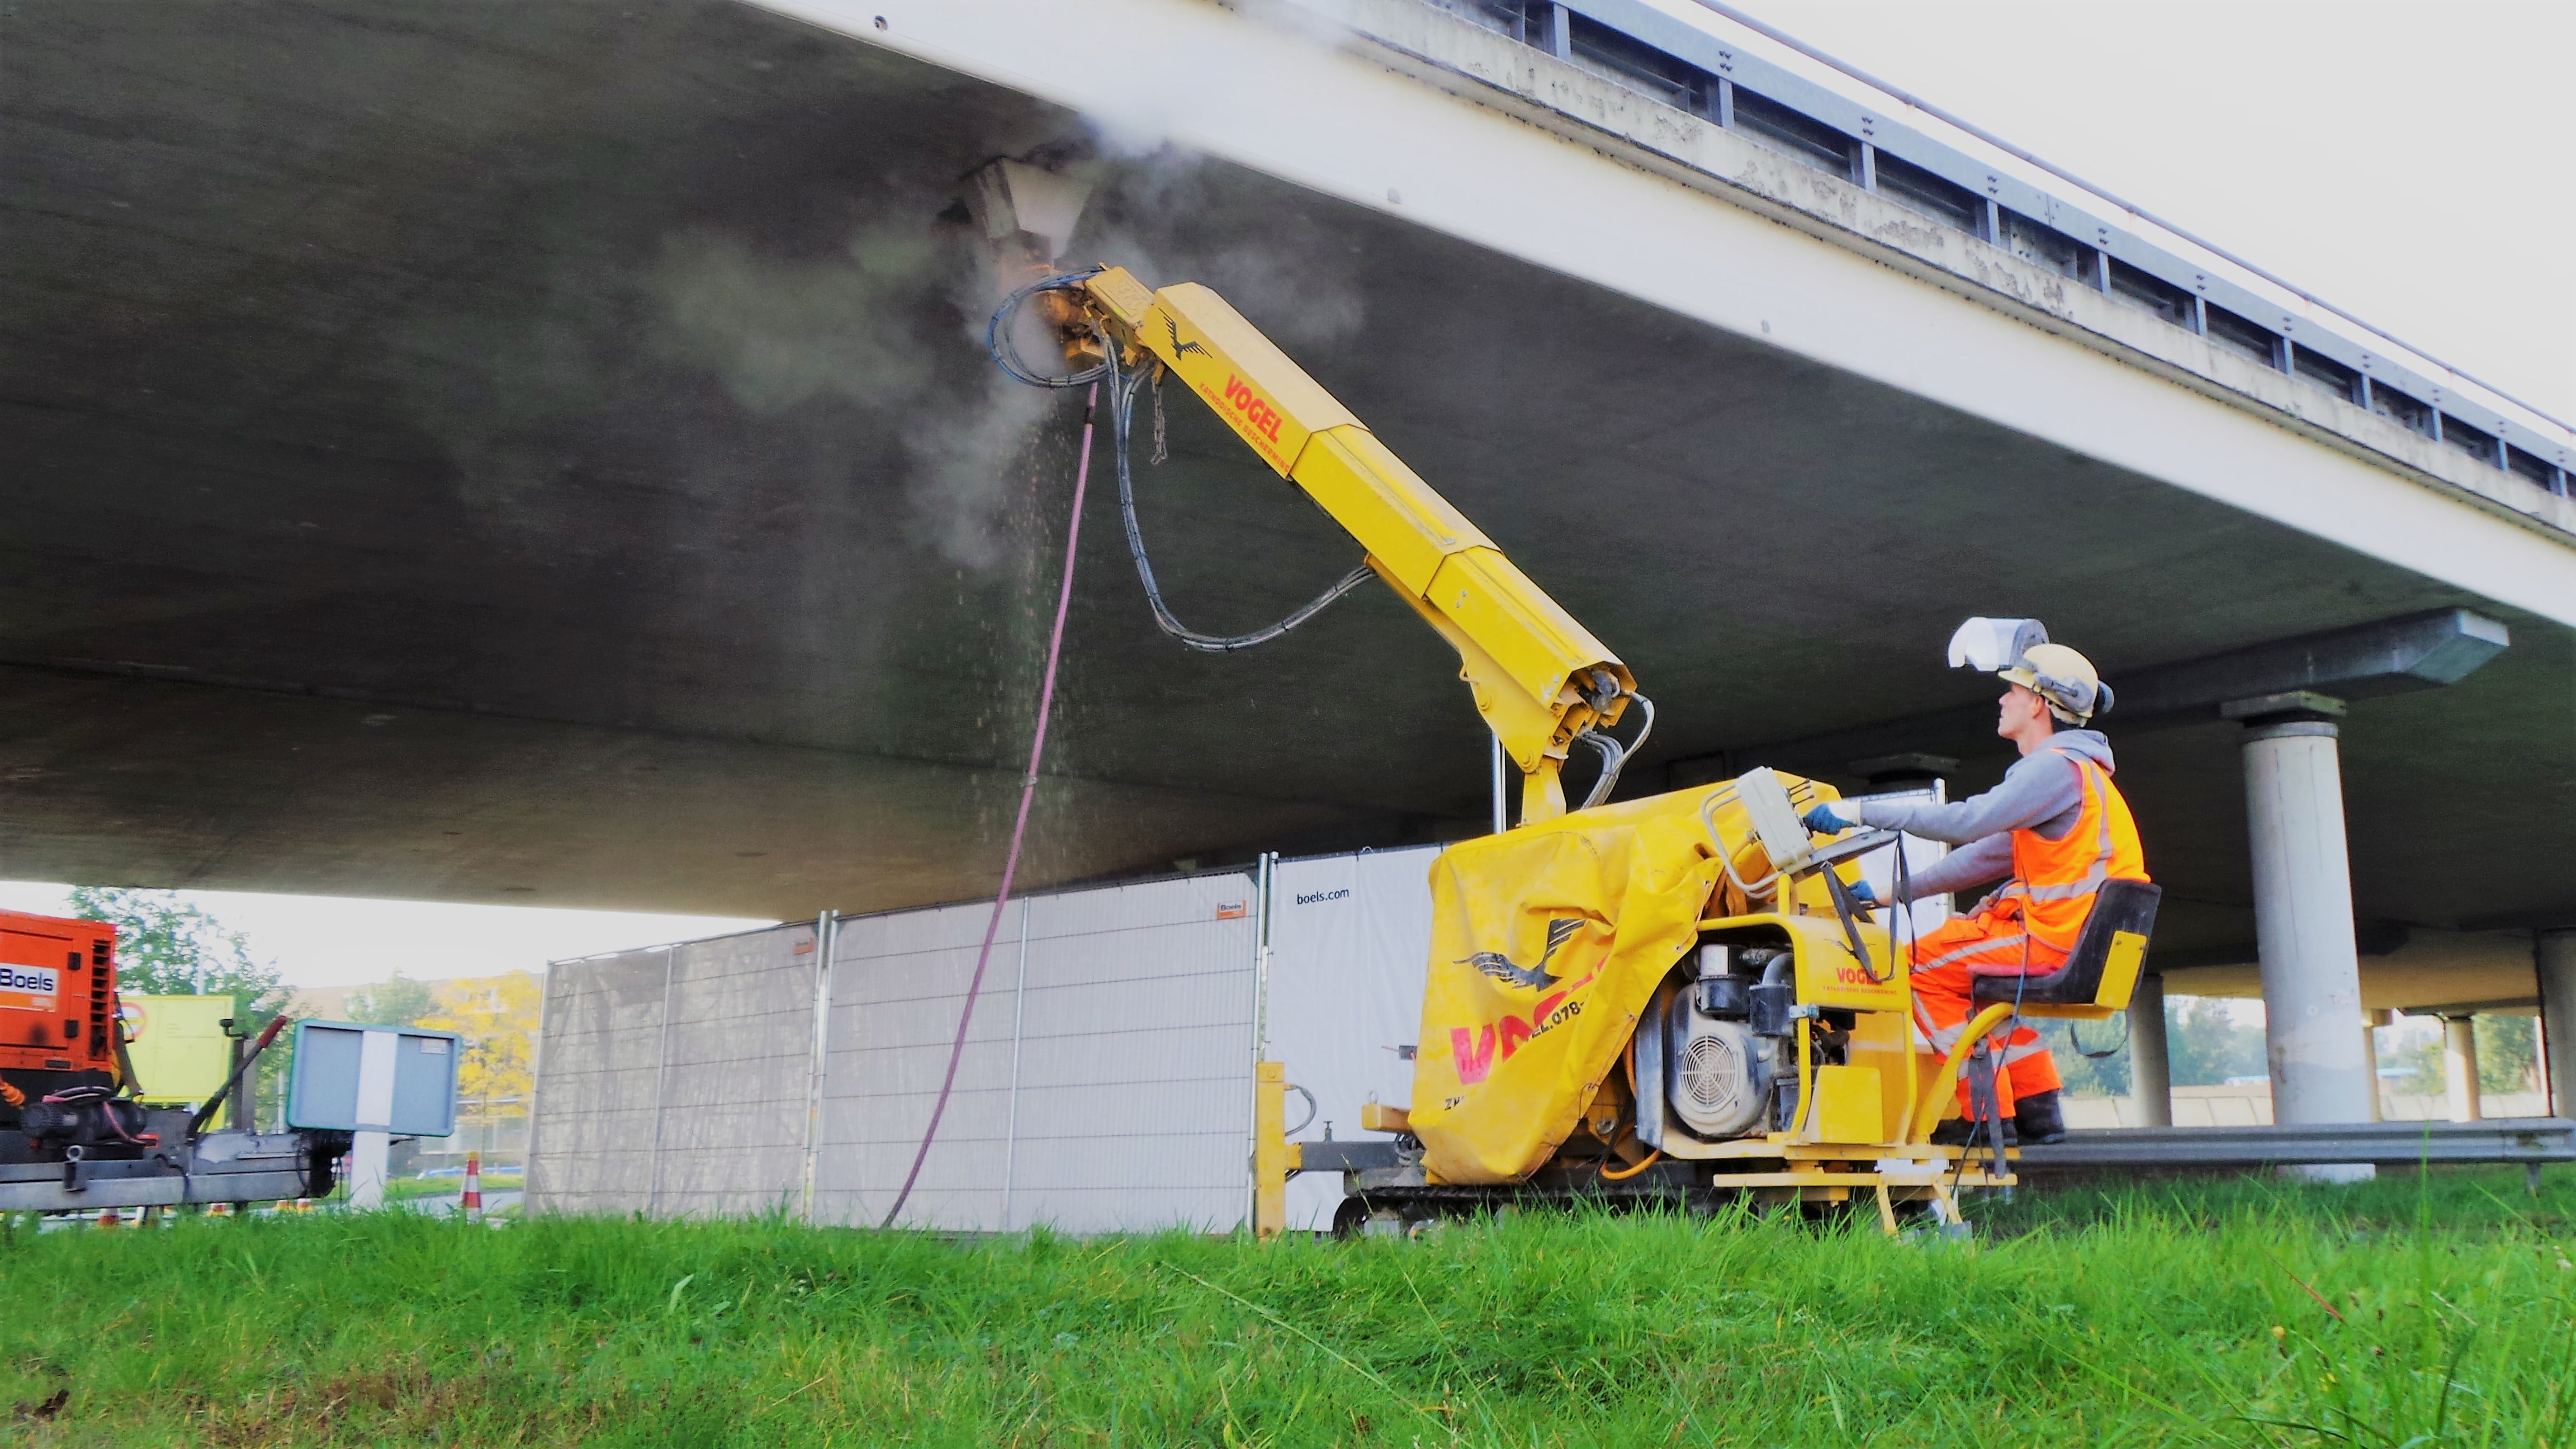 Hydro demolition reinforcement inspection